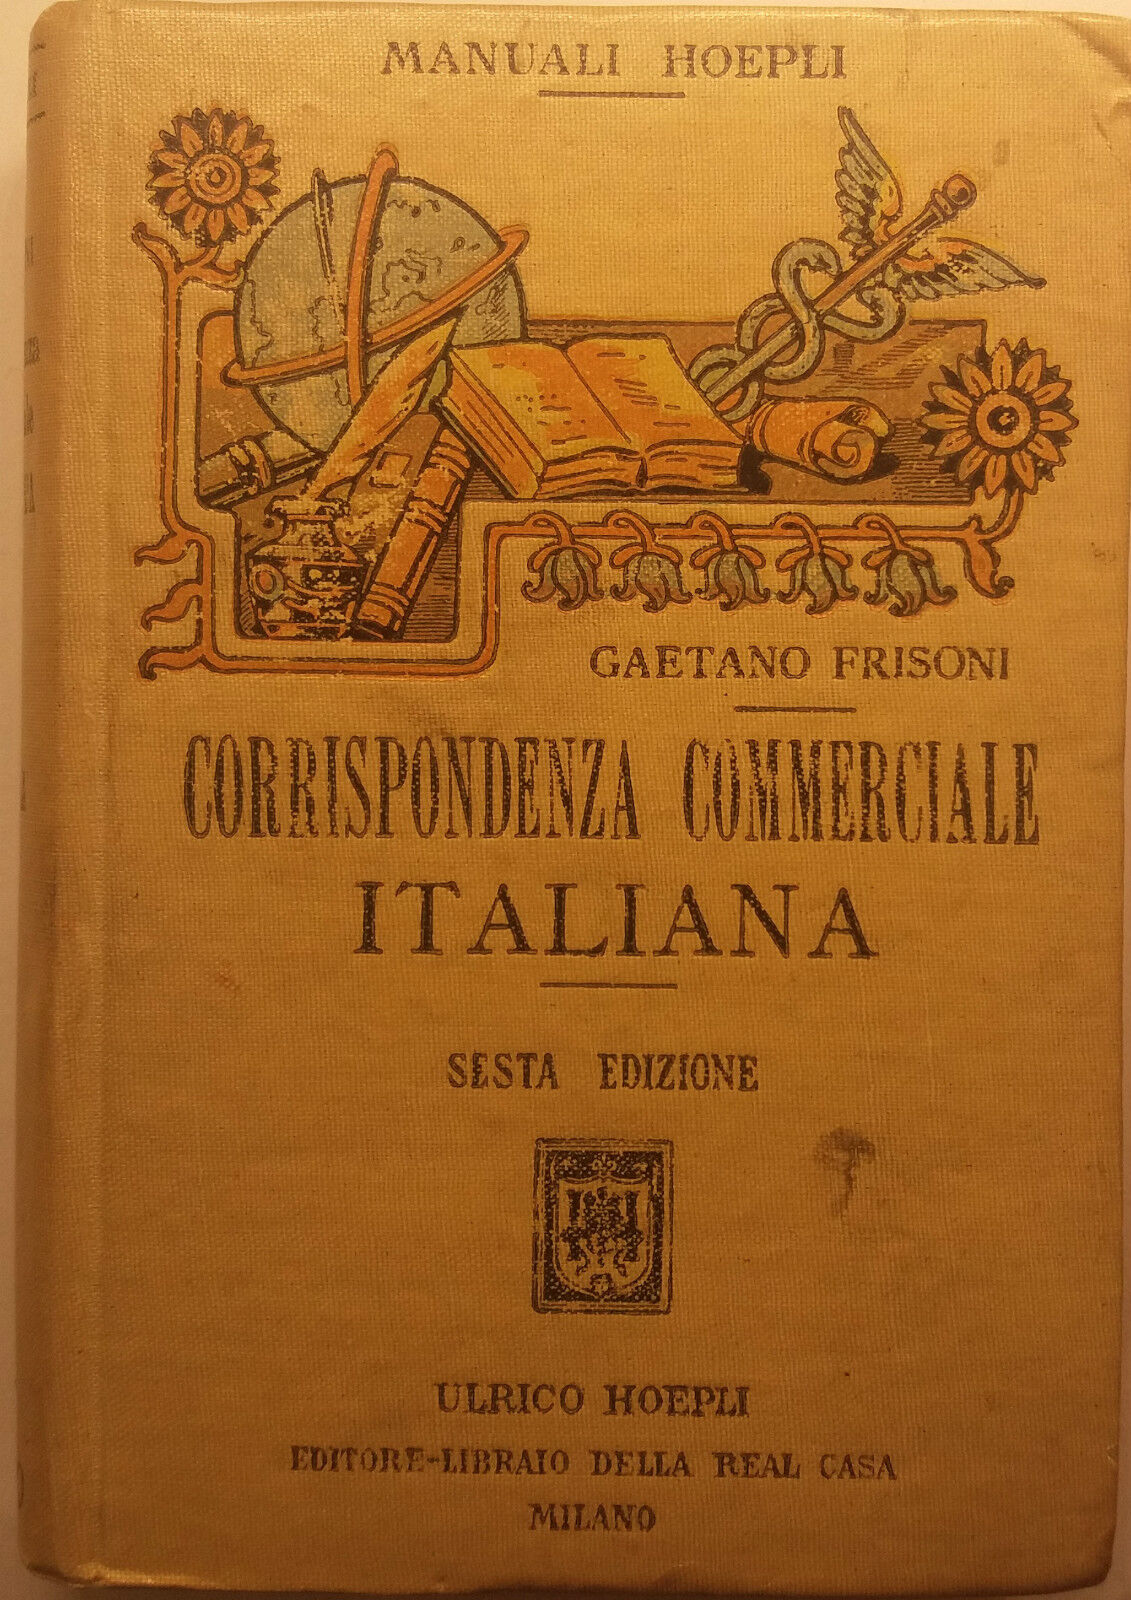 Corrispondenza commerciale italiana - Gaetano Frisoni - Hoepli - 1919 - G